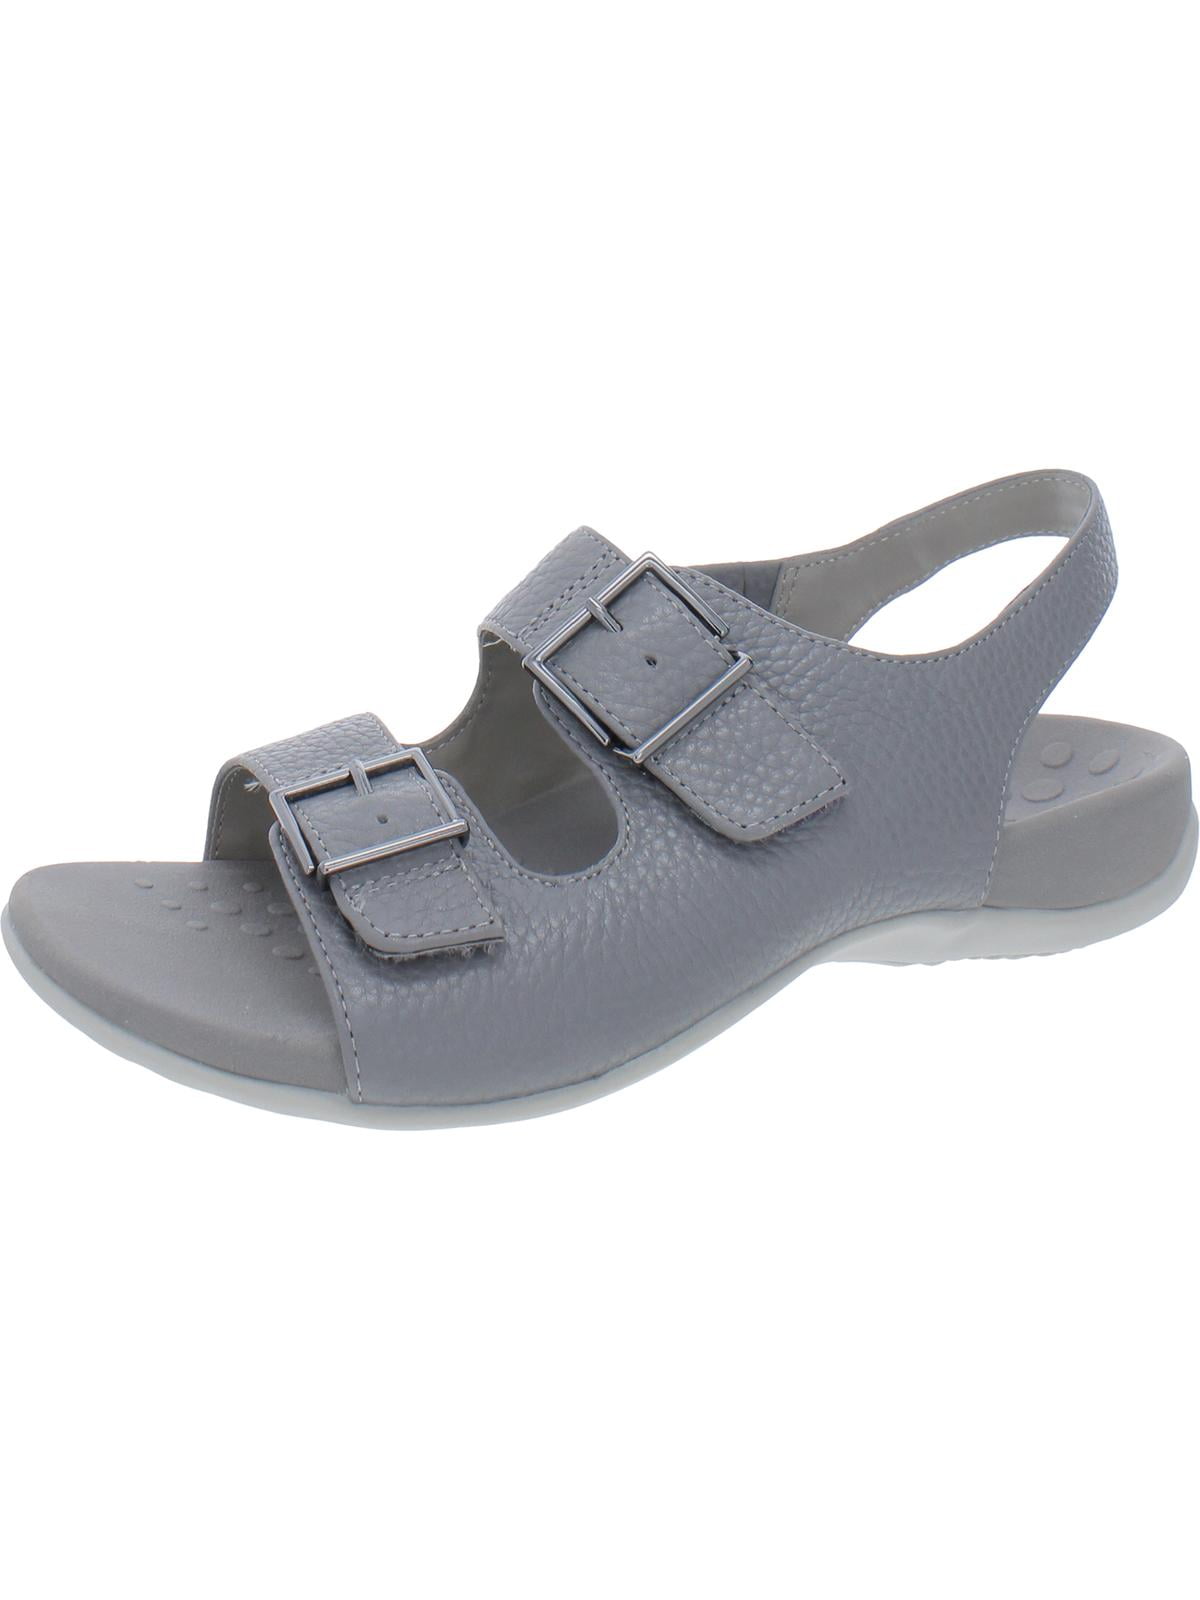 Vionic Womens Albie Leather Casual Sport Sandals - Walmart.com